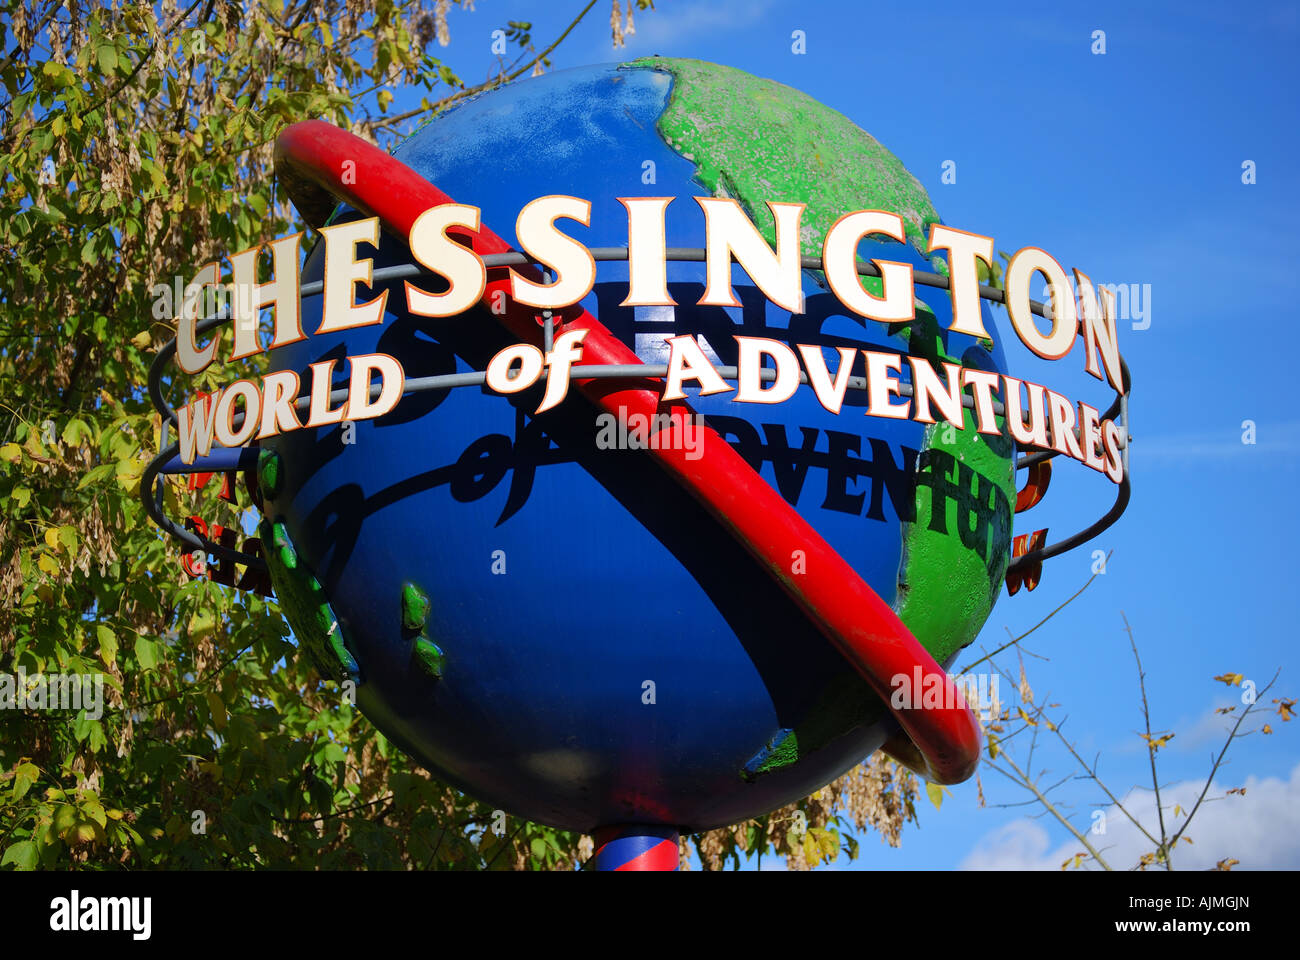 Entrance globe sign, Chessington World of Adventures Theme Park, Chessington, Surrey, England, United Kingdom Stock Photo